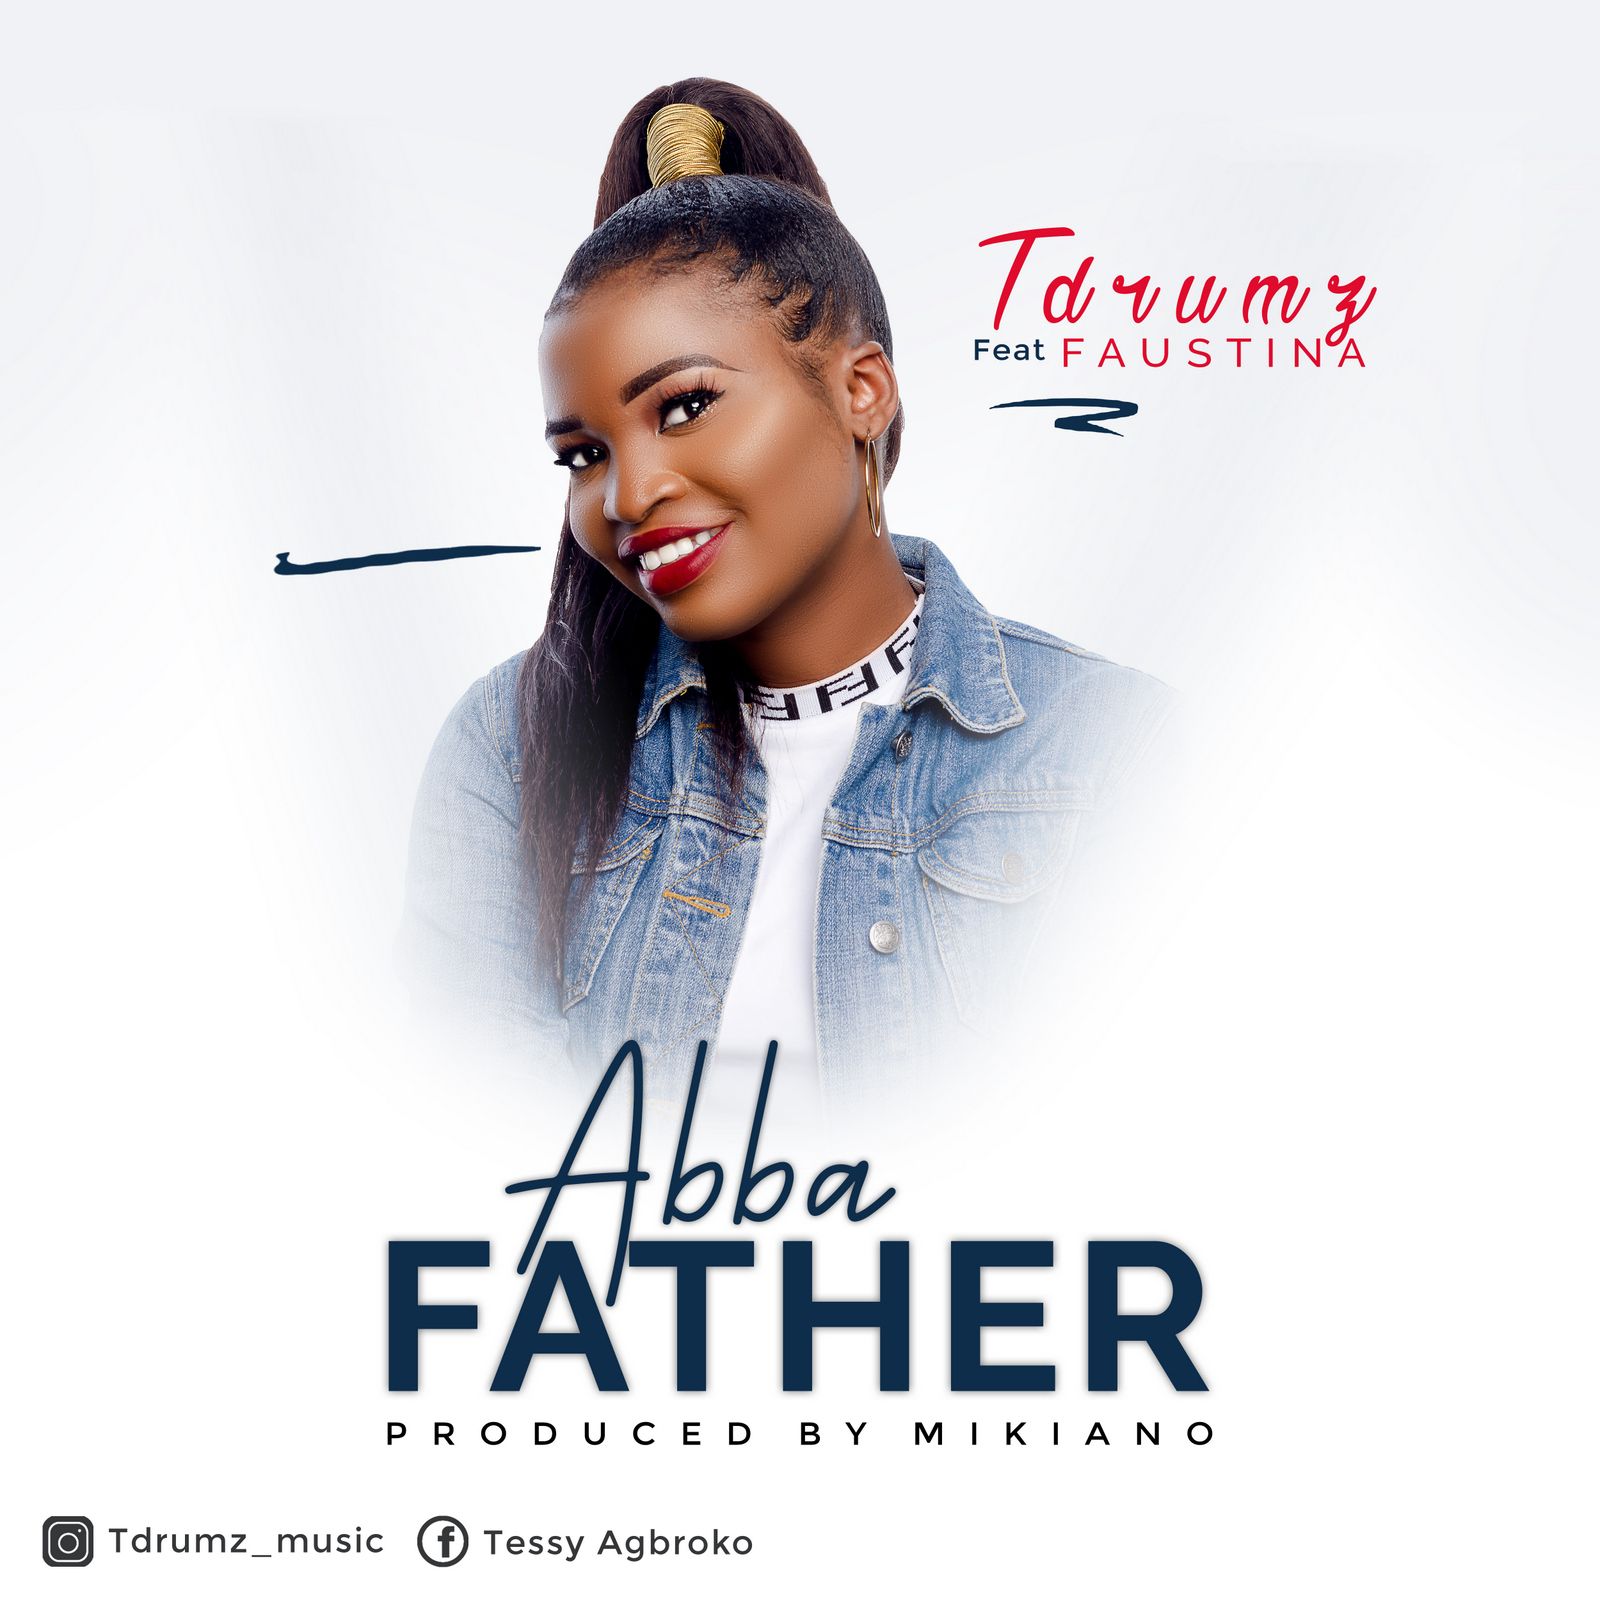 Tdrumz - Abba Father (feat. Faustina) Artwork | AceWorldTeam.com